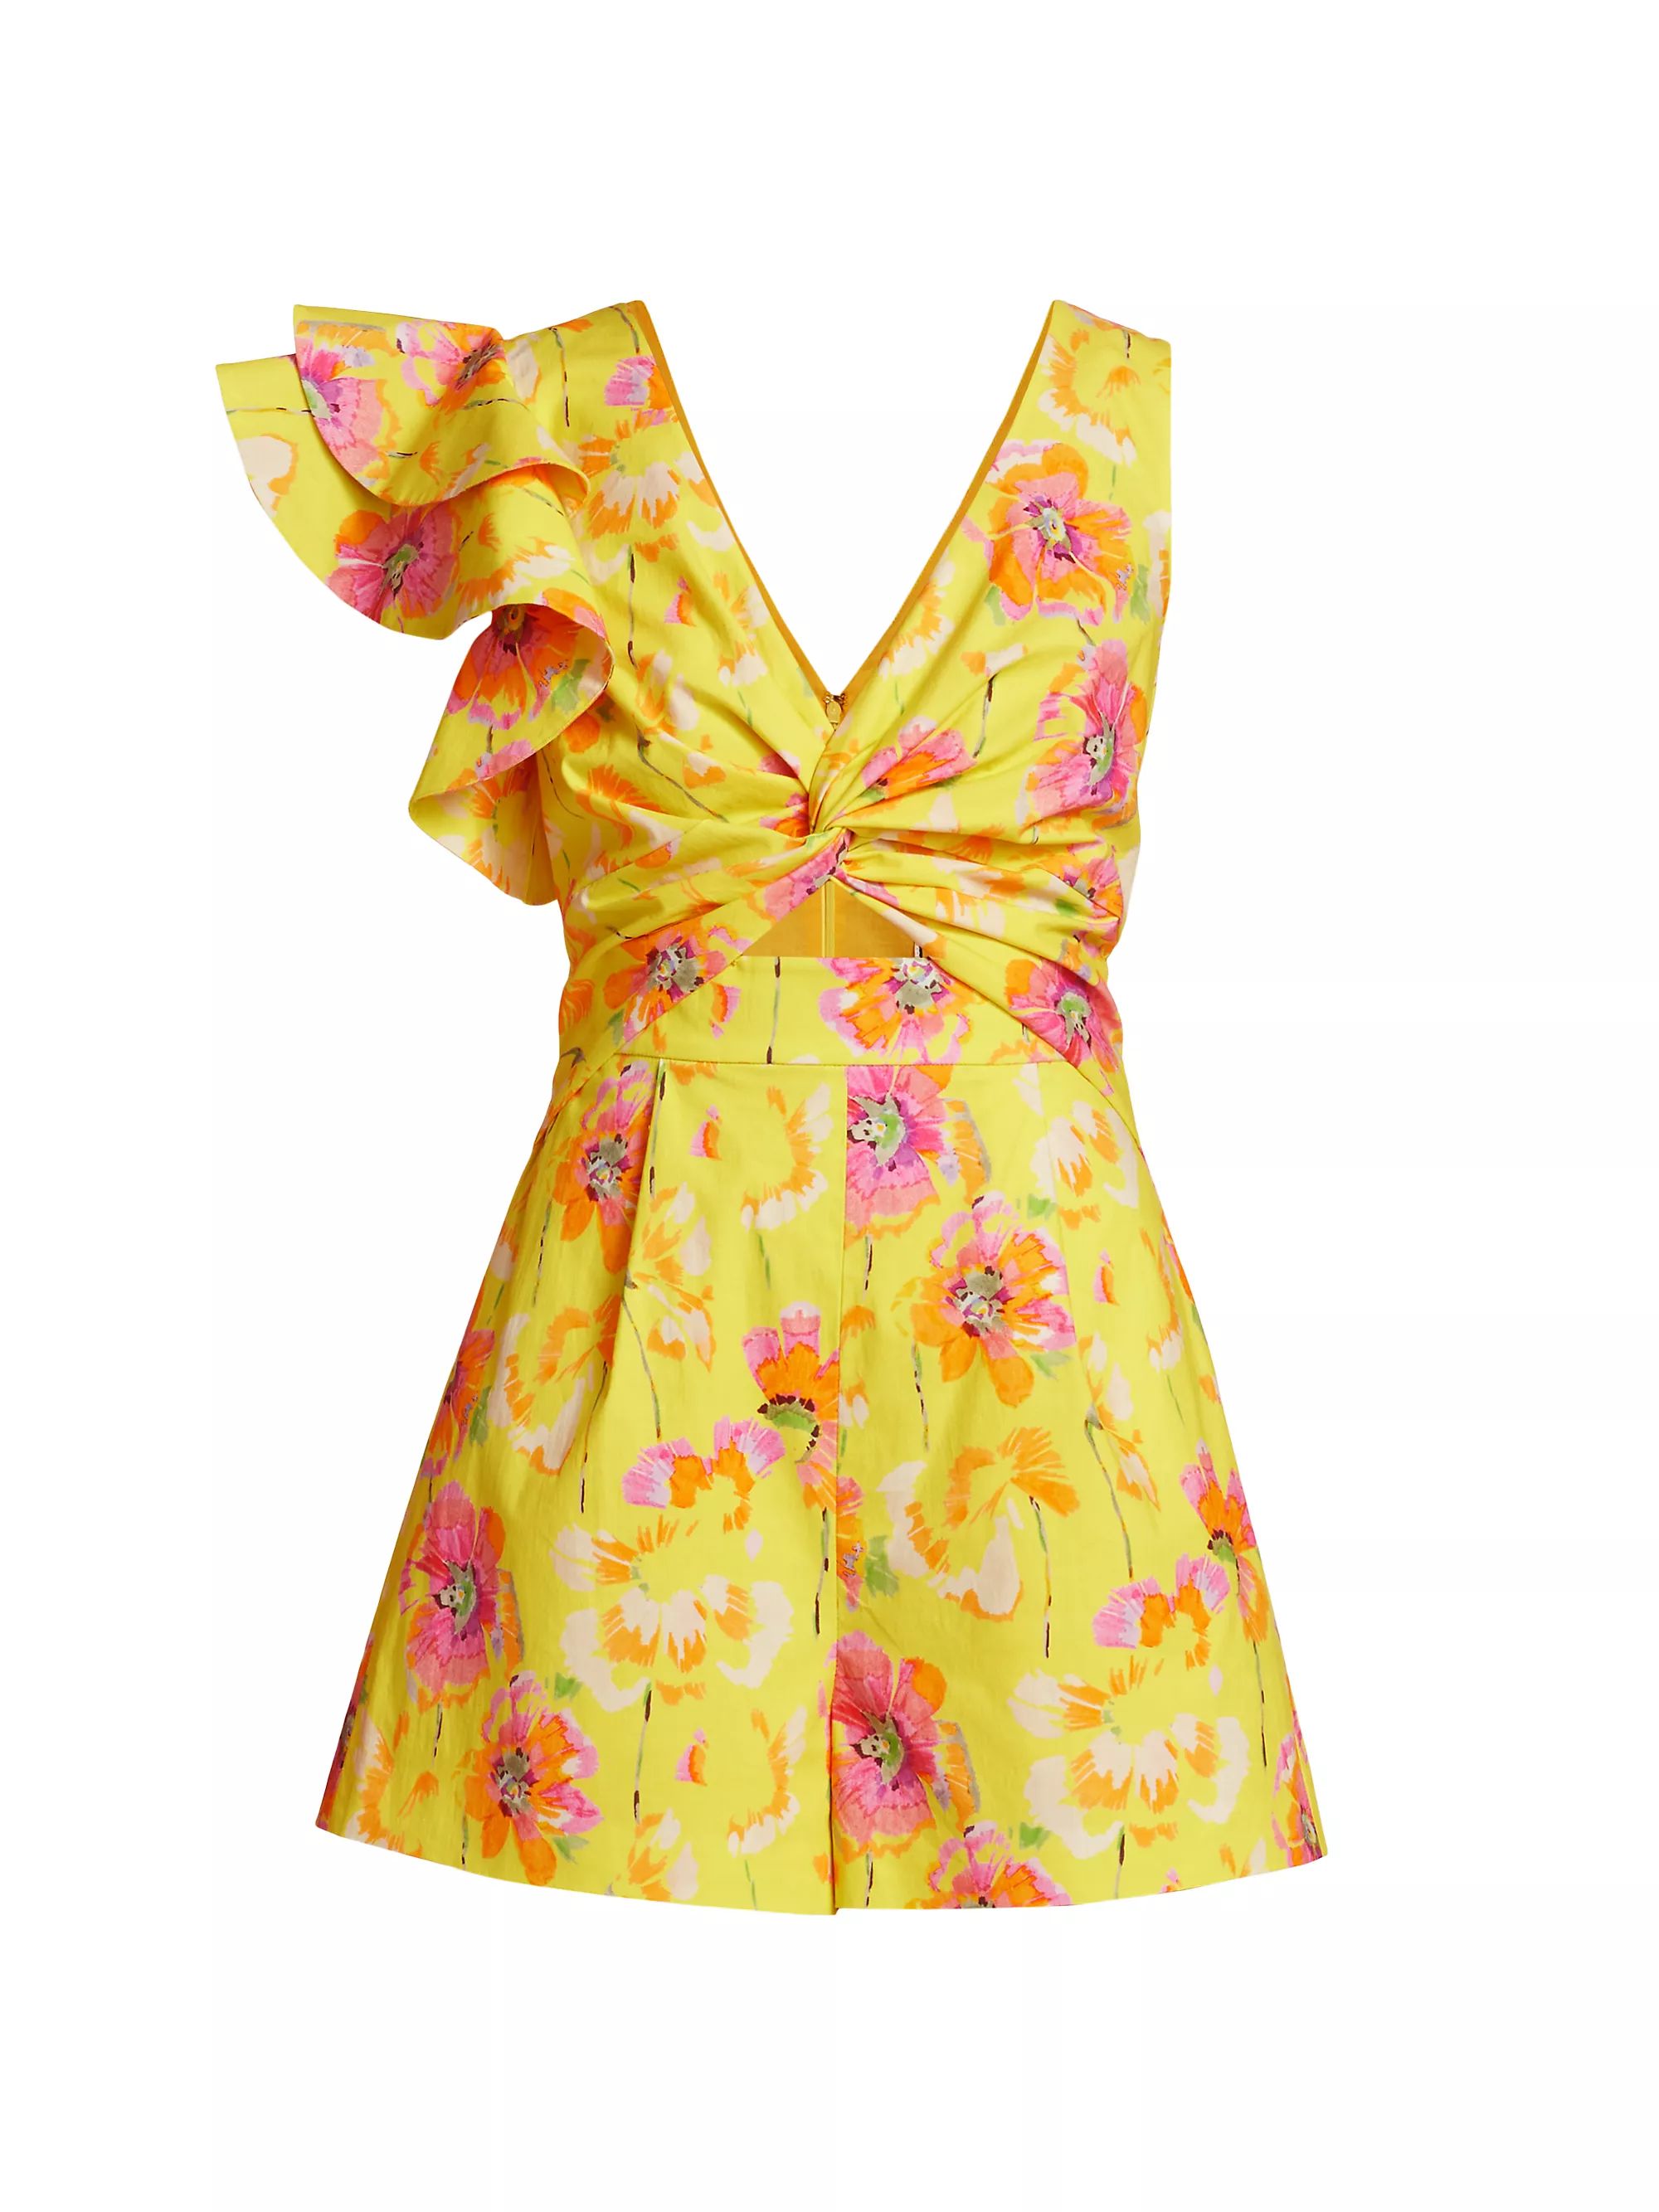 Sunshine FireworkAll Jumpsuits & RompersAmurJoette Floral Cut-Out Romper$398
            
       ... | Saks Fifth Avenue